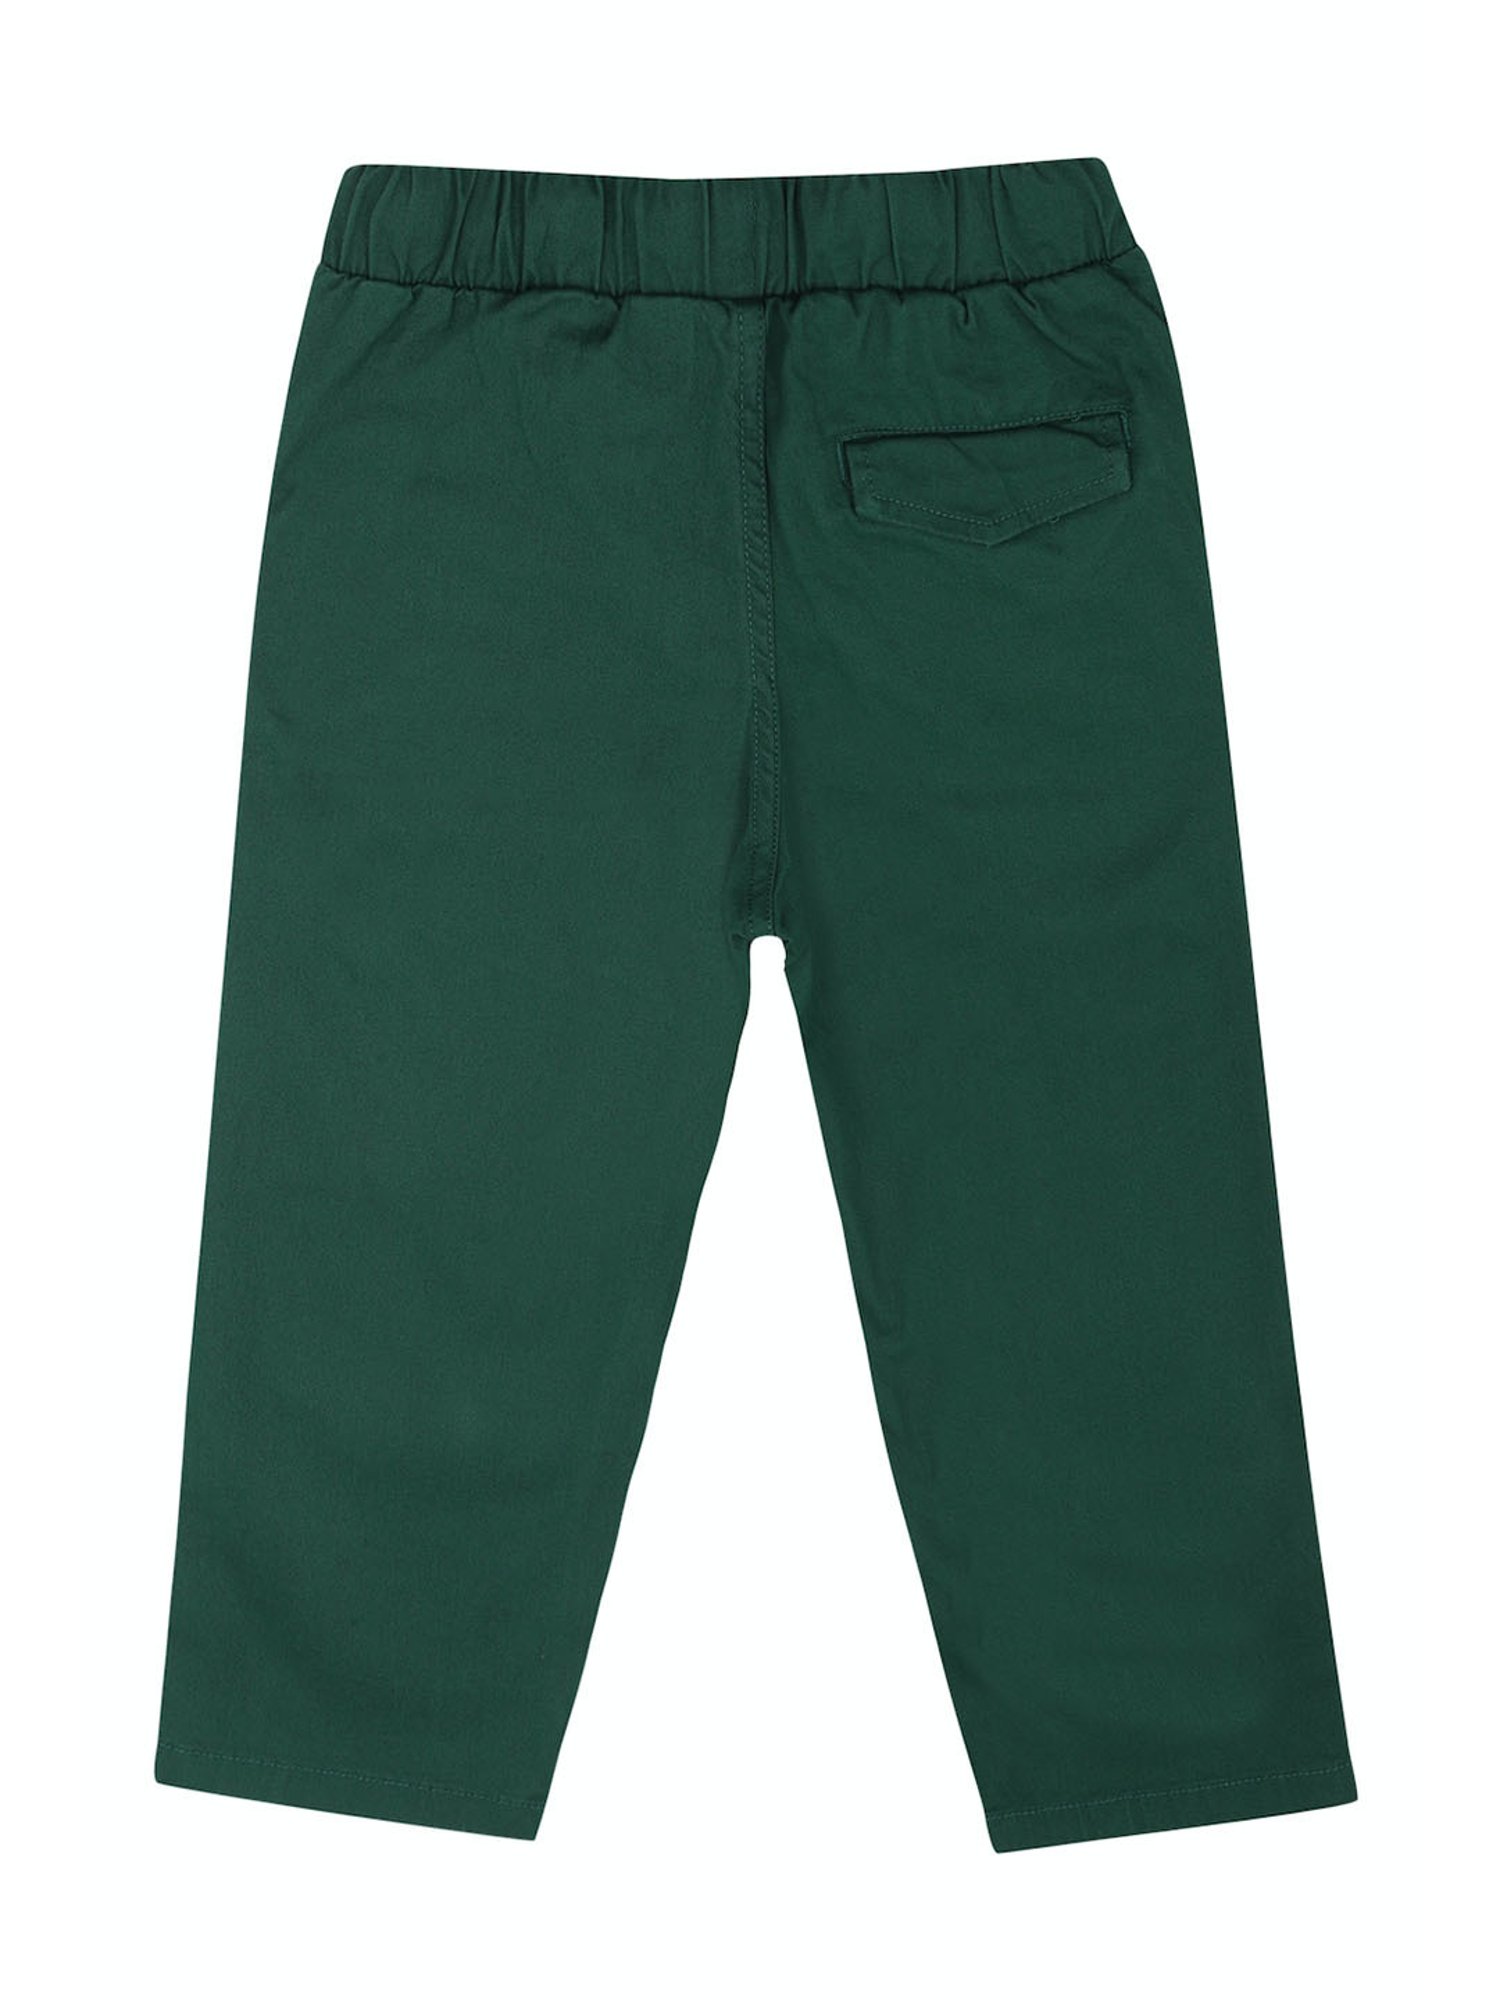 New Hackett London Boys Slim Chino Pants Trousers OLIVE Green 9 10 9/10 |  eBay